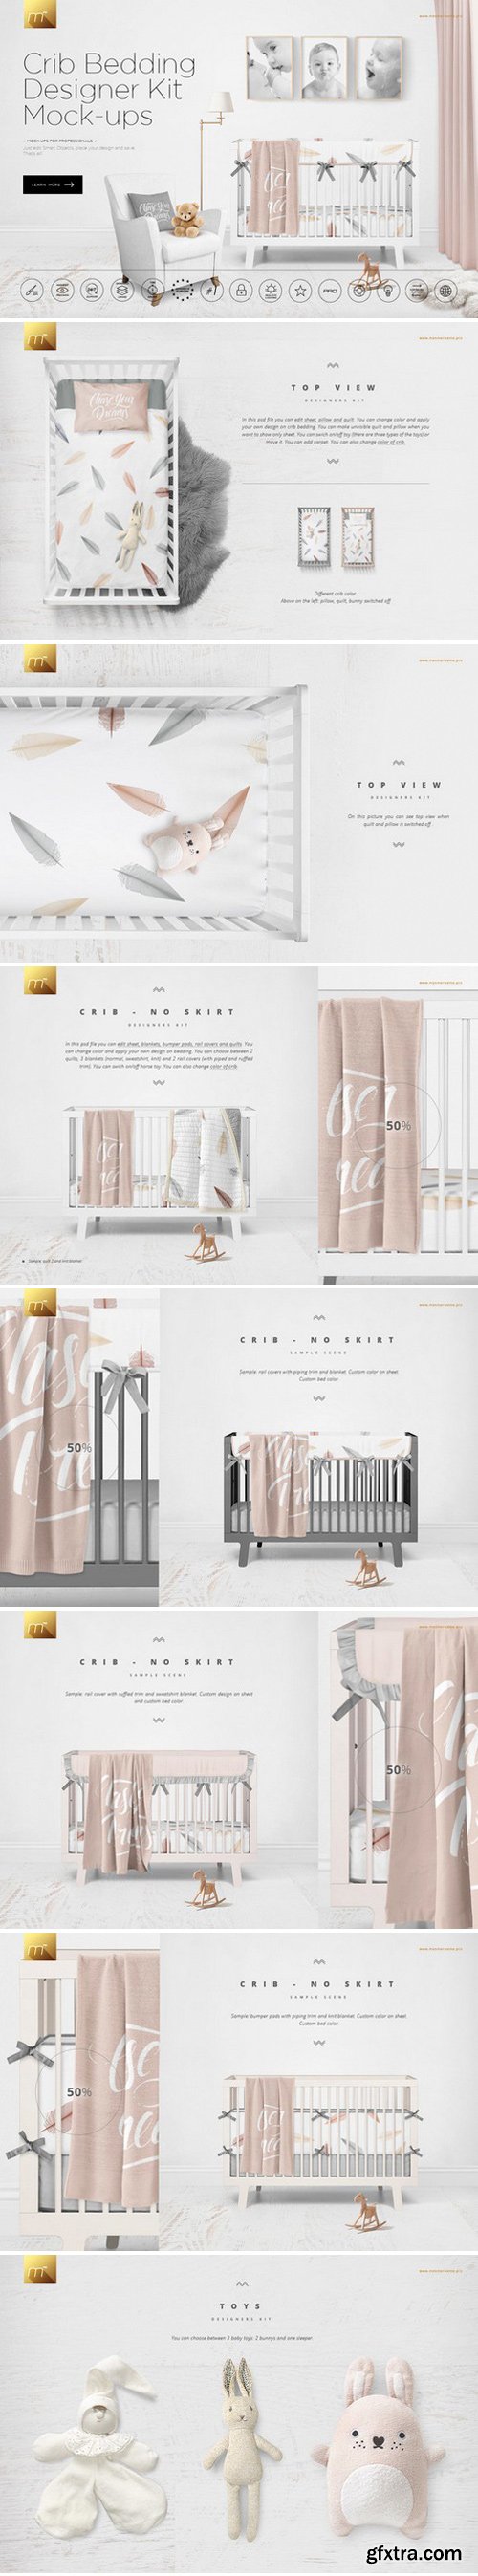 CM - Crib Bedding Designers Kit Mockups 792220